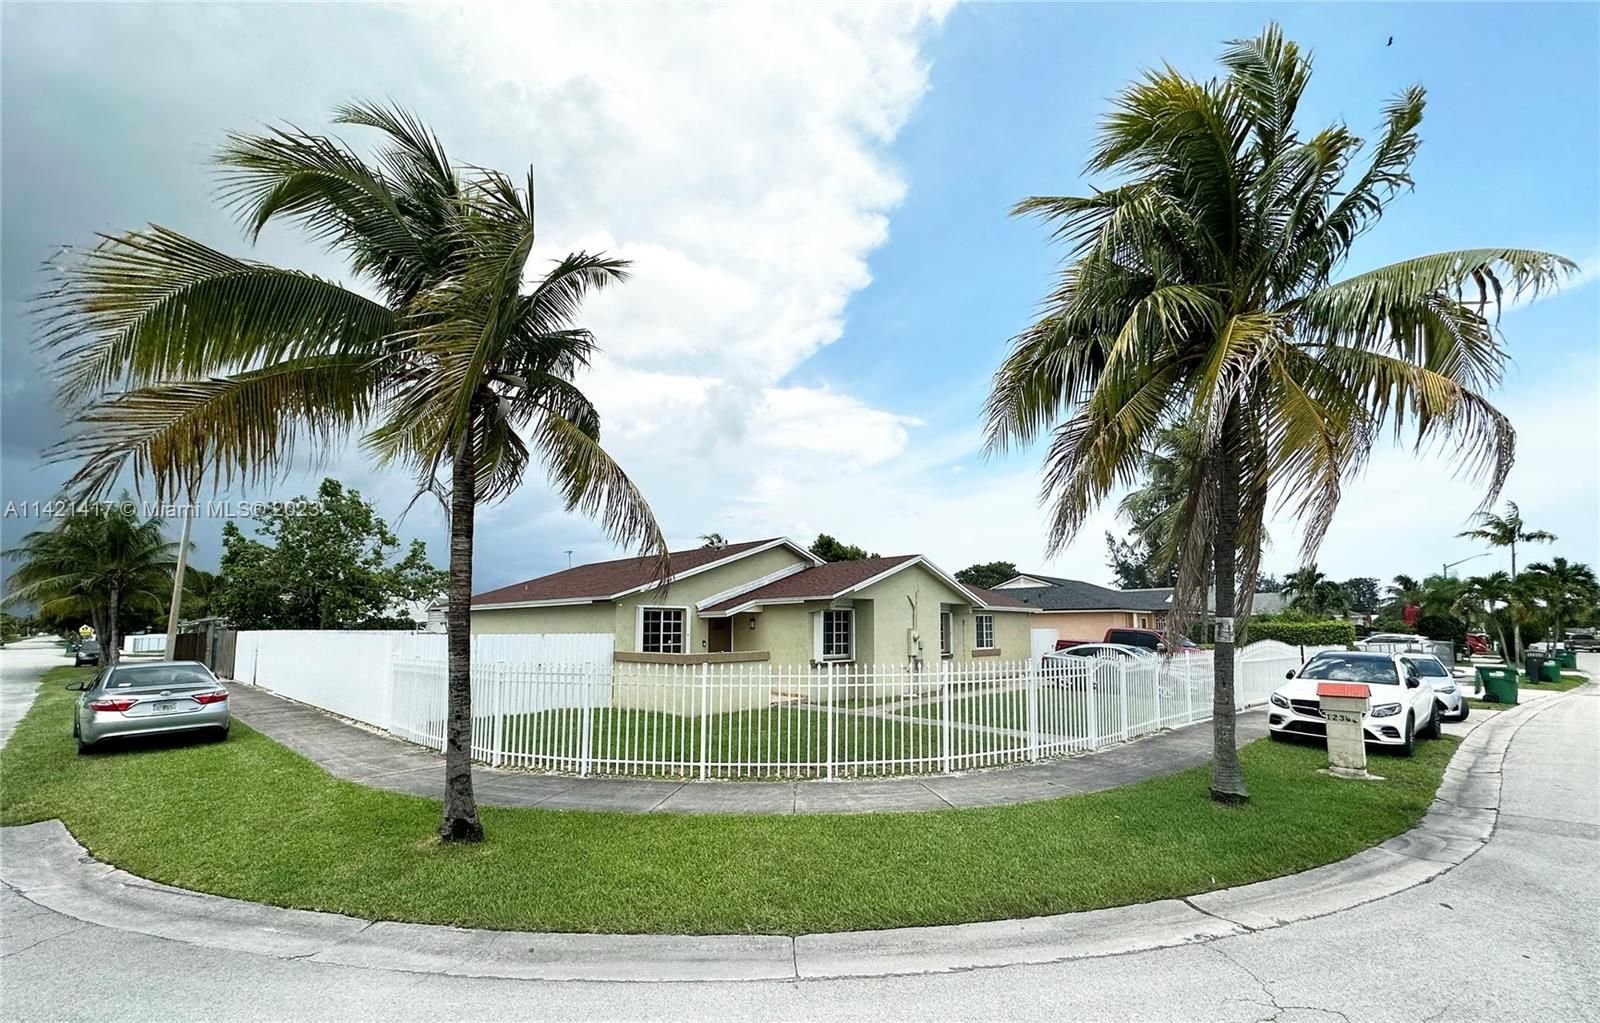 Real estate property located at 12361 195th Ter, Miami-Dade County, Miami, FL